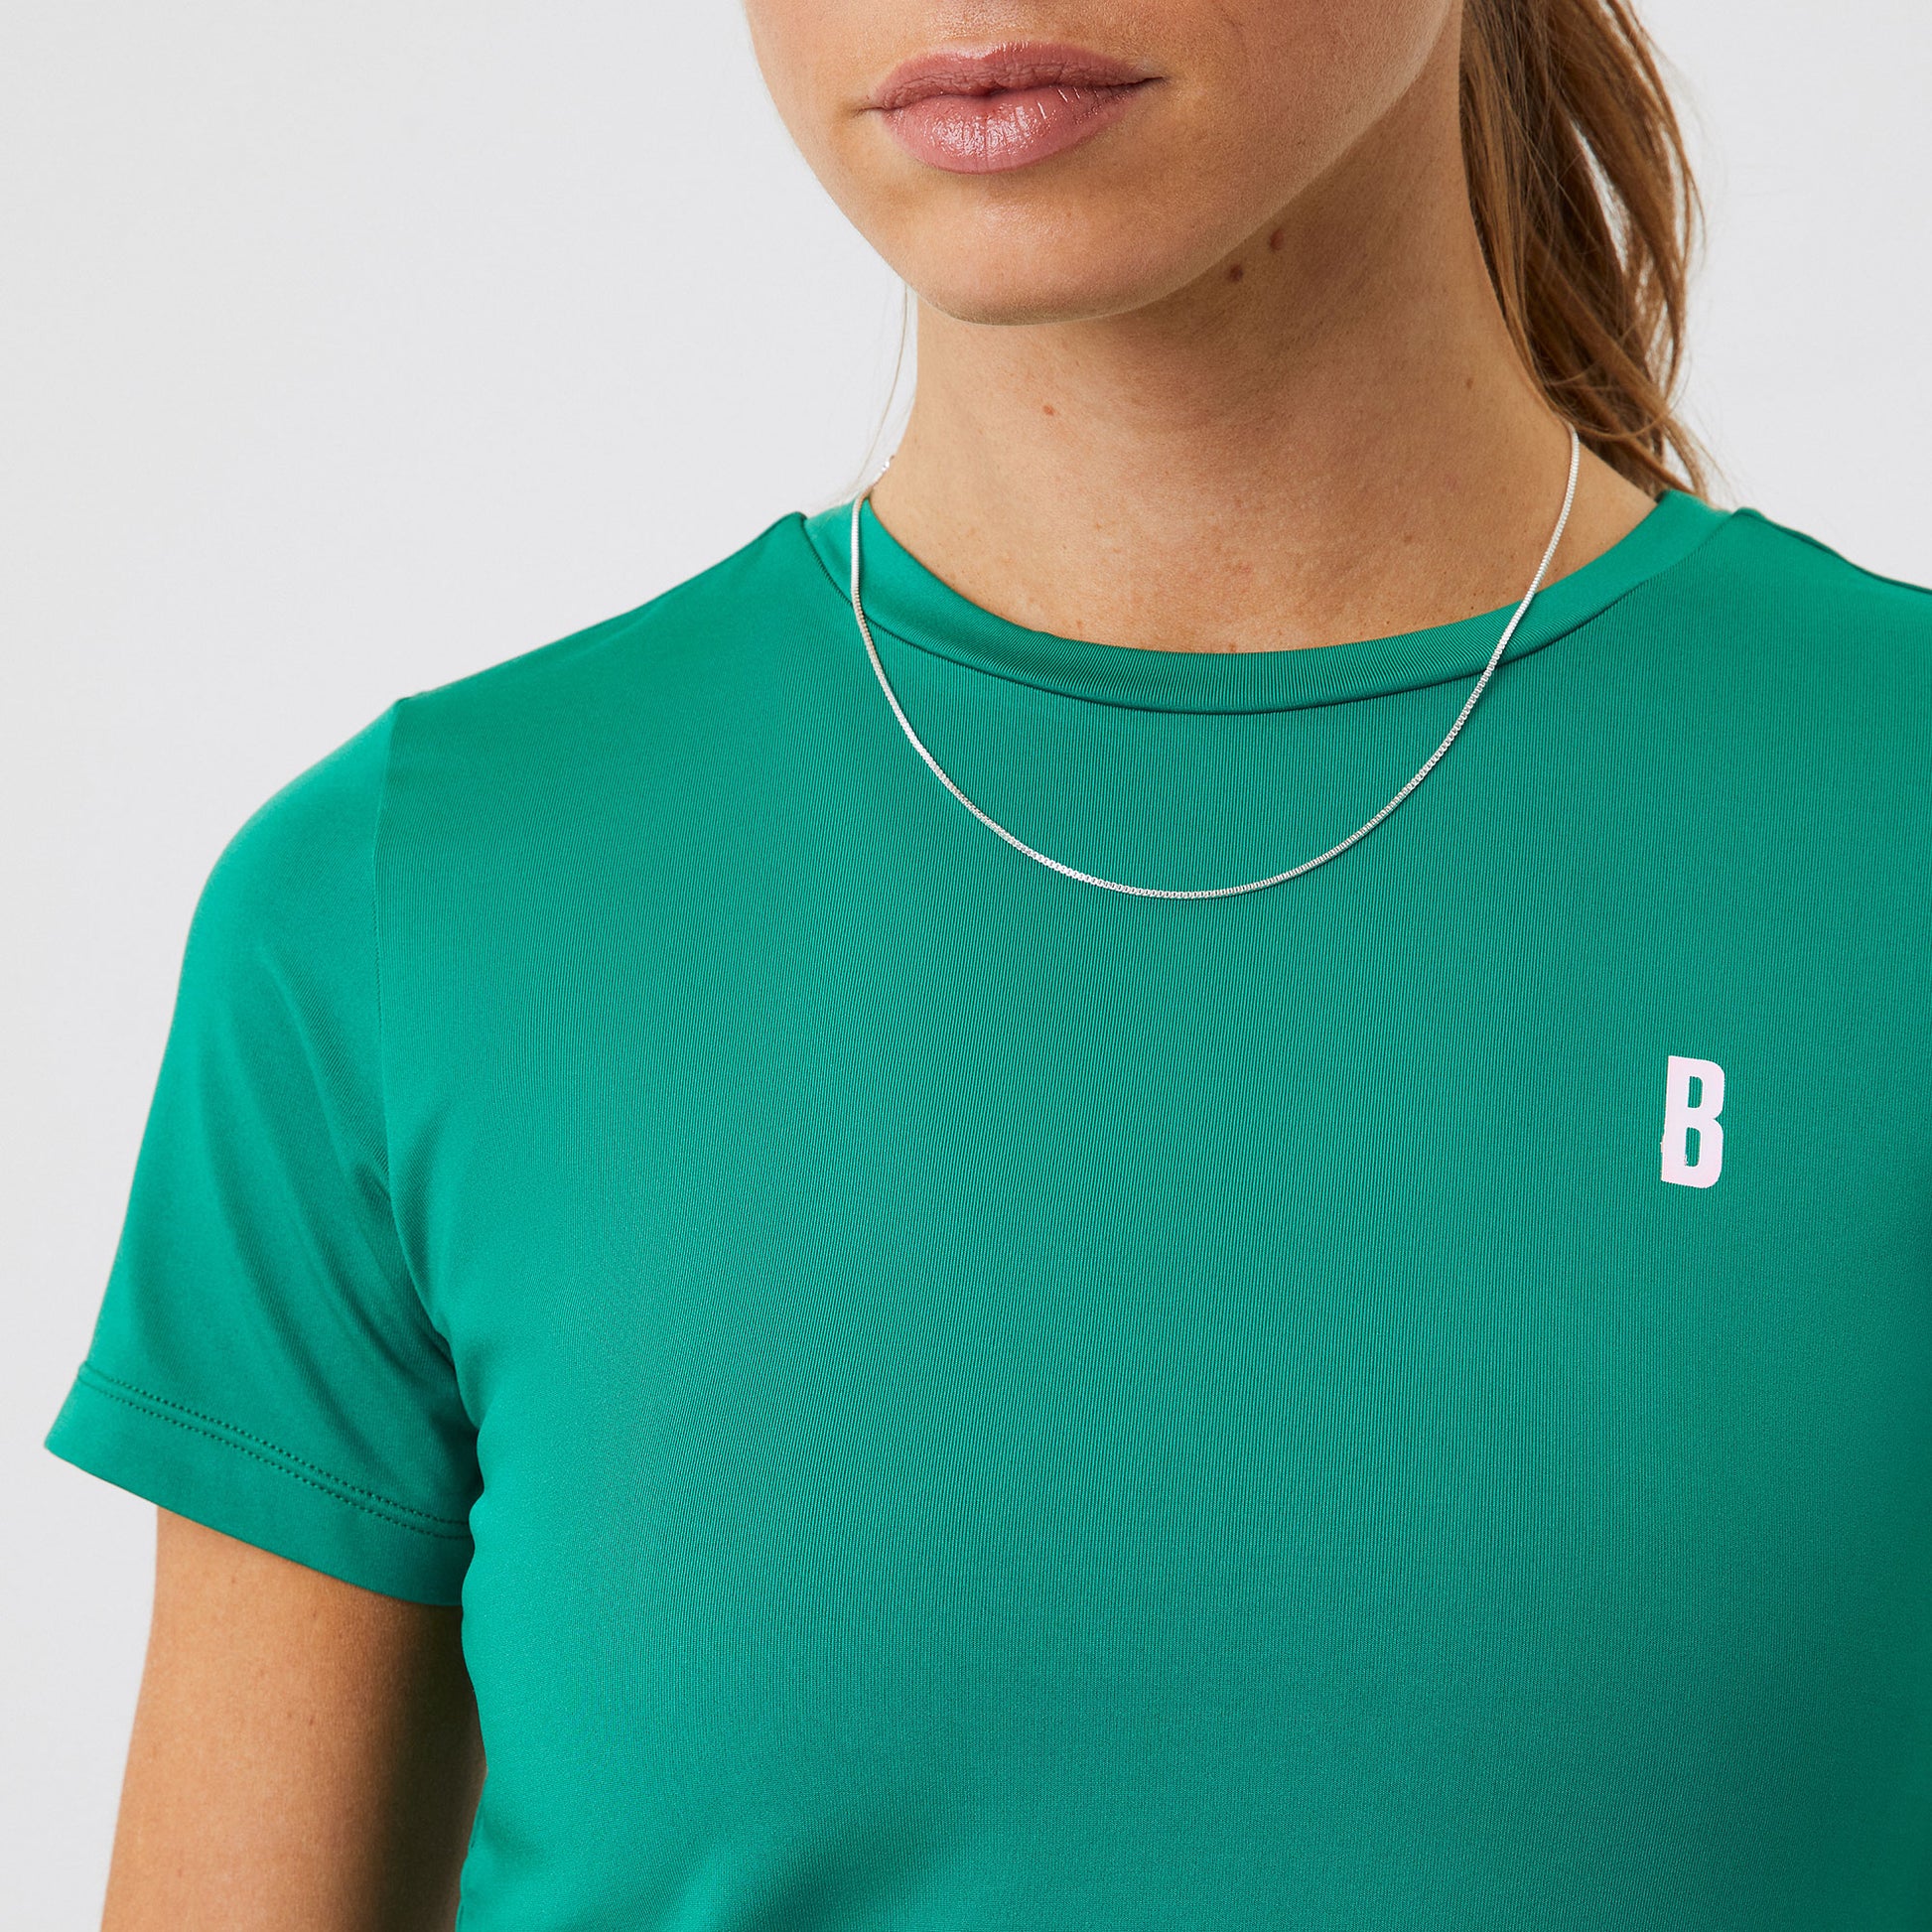 Björn Borg Ace Women's Slim Tennis Shirt Green (3)